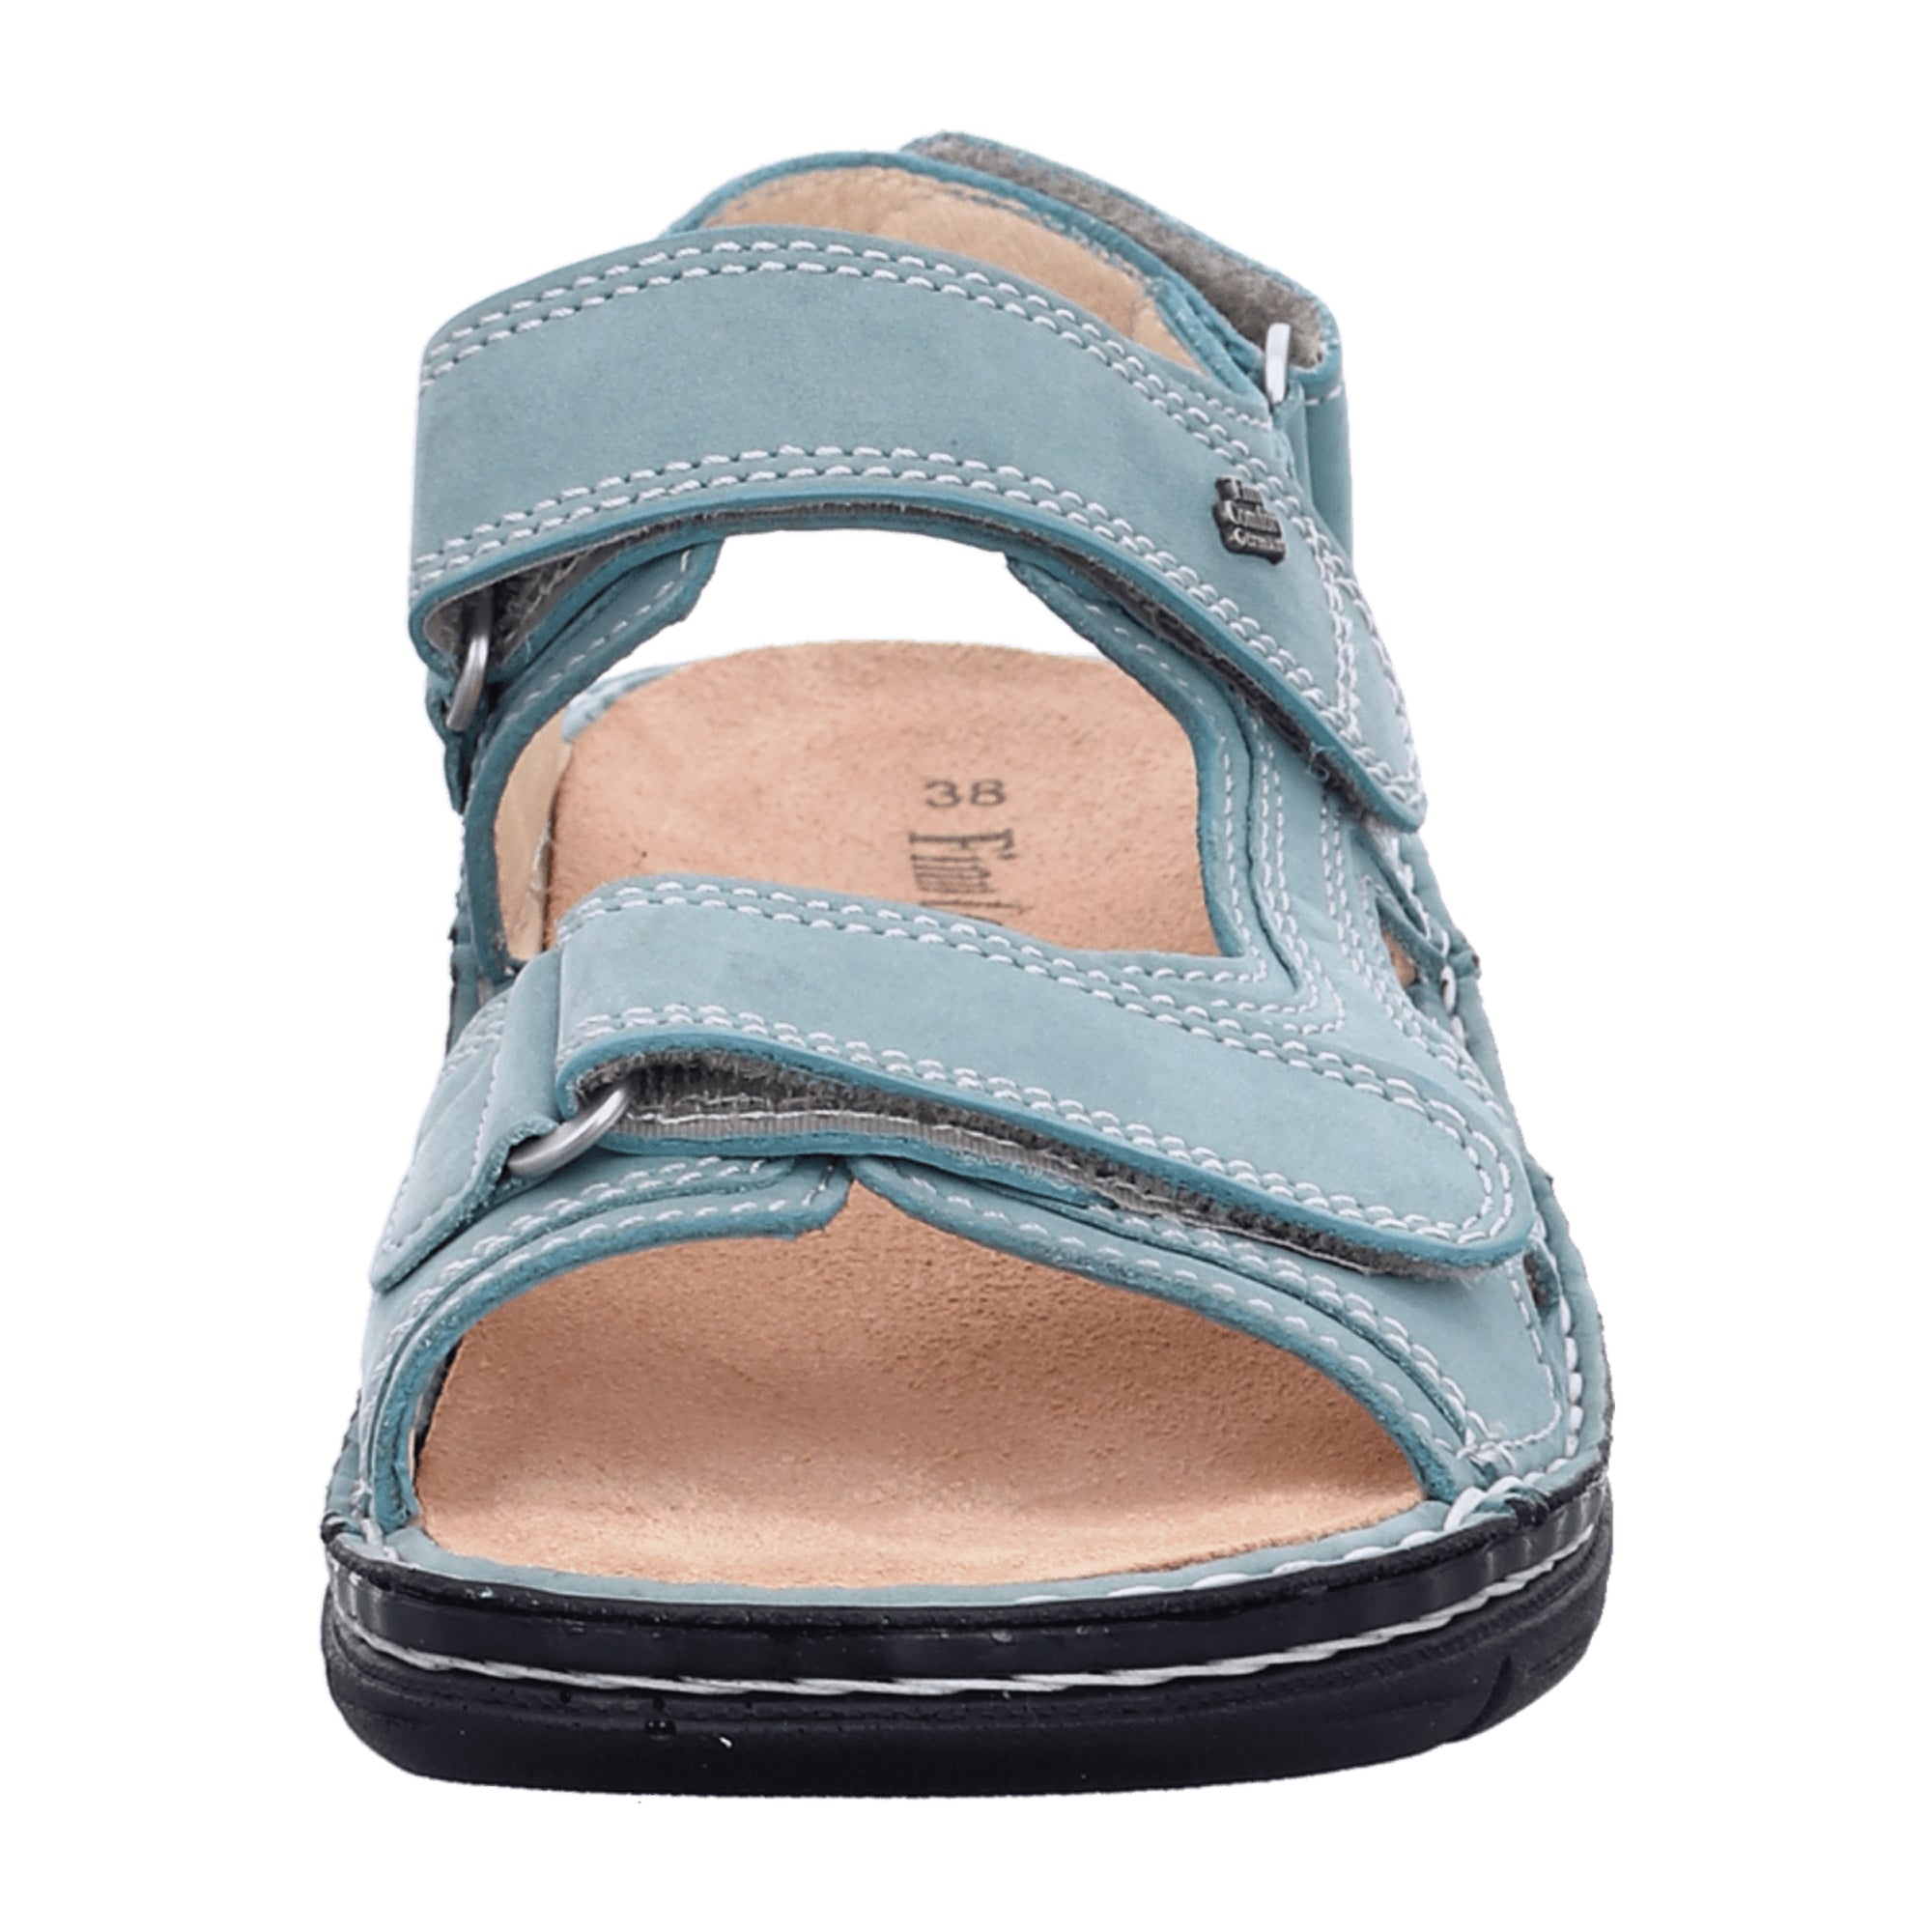 Finn Comfort Wanaka 81540 Women's Comfortable Walking Shoes - Stylish Navy Blue